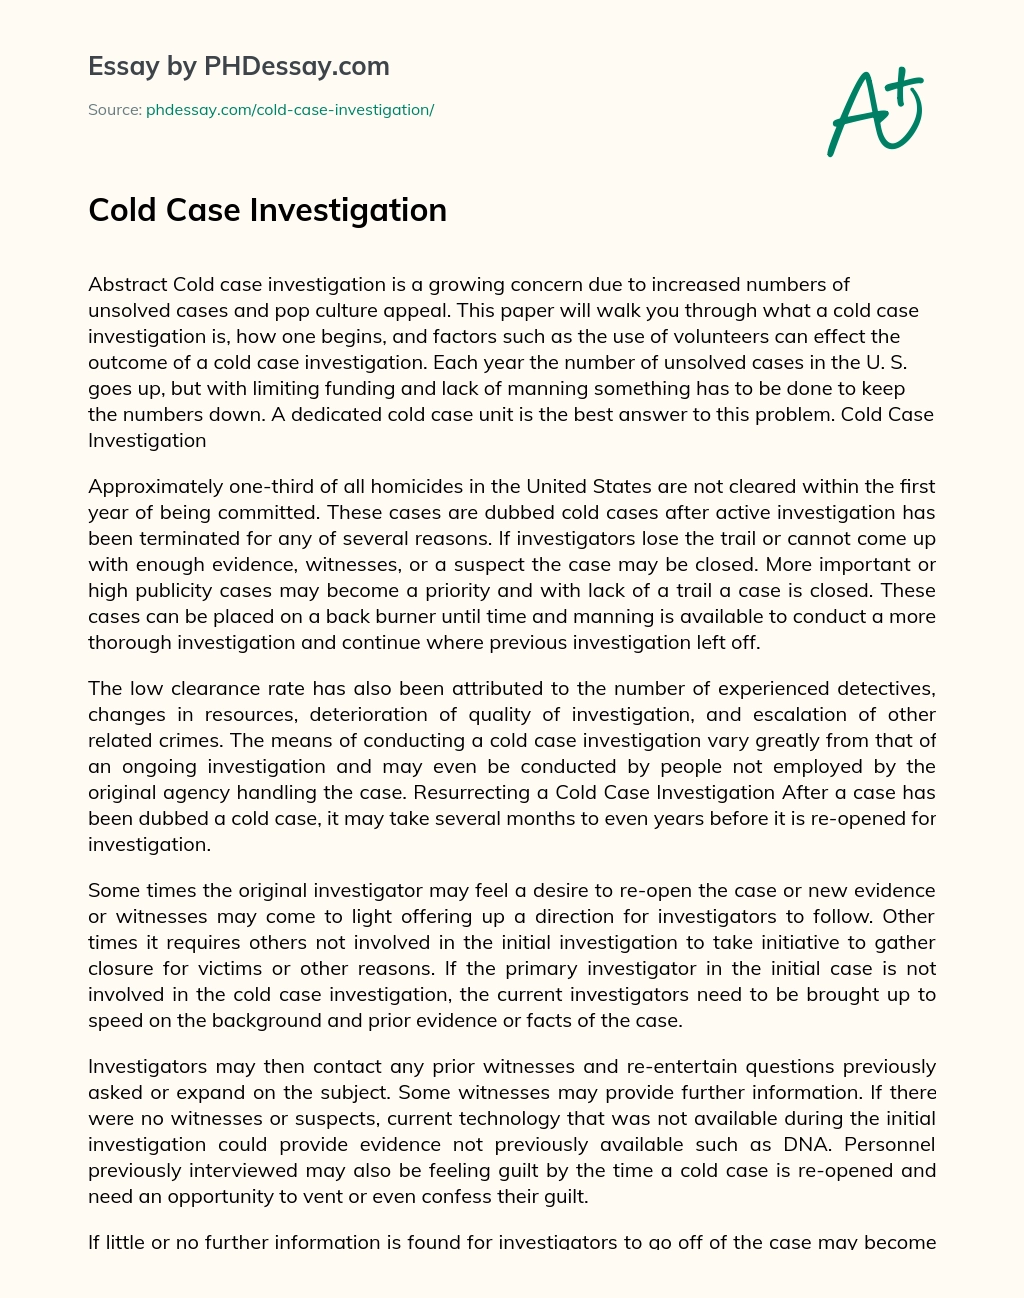 Cold Case Investigation essay